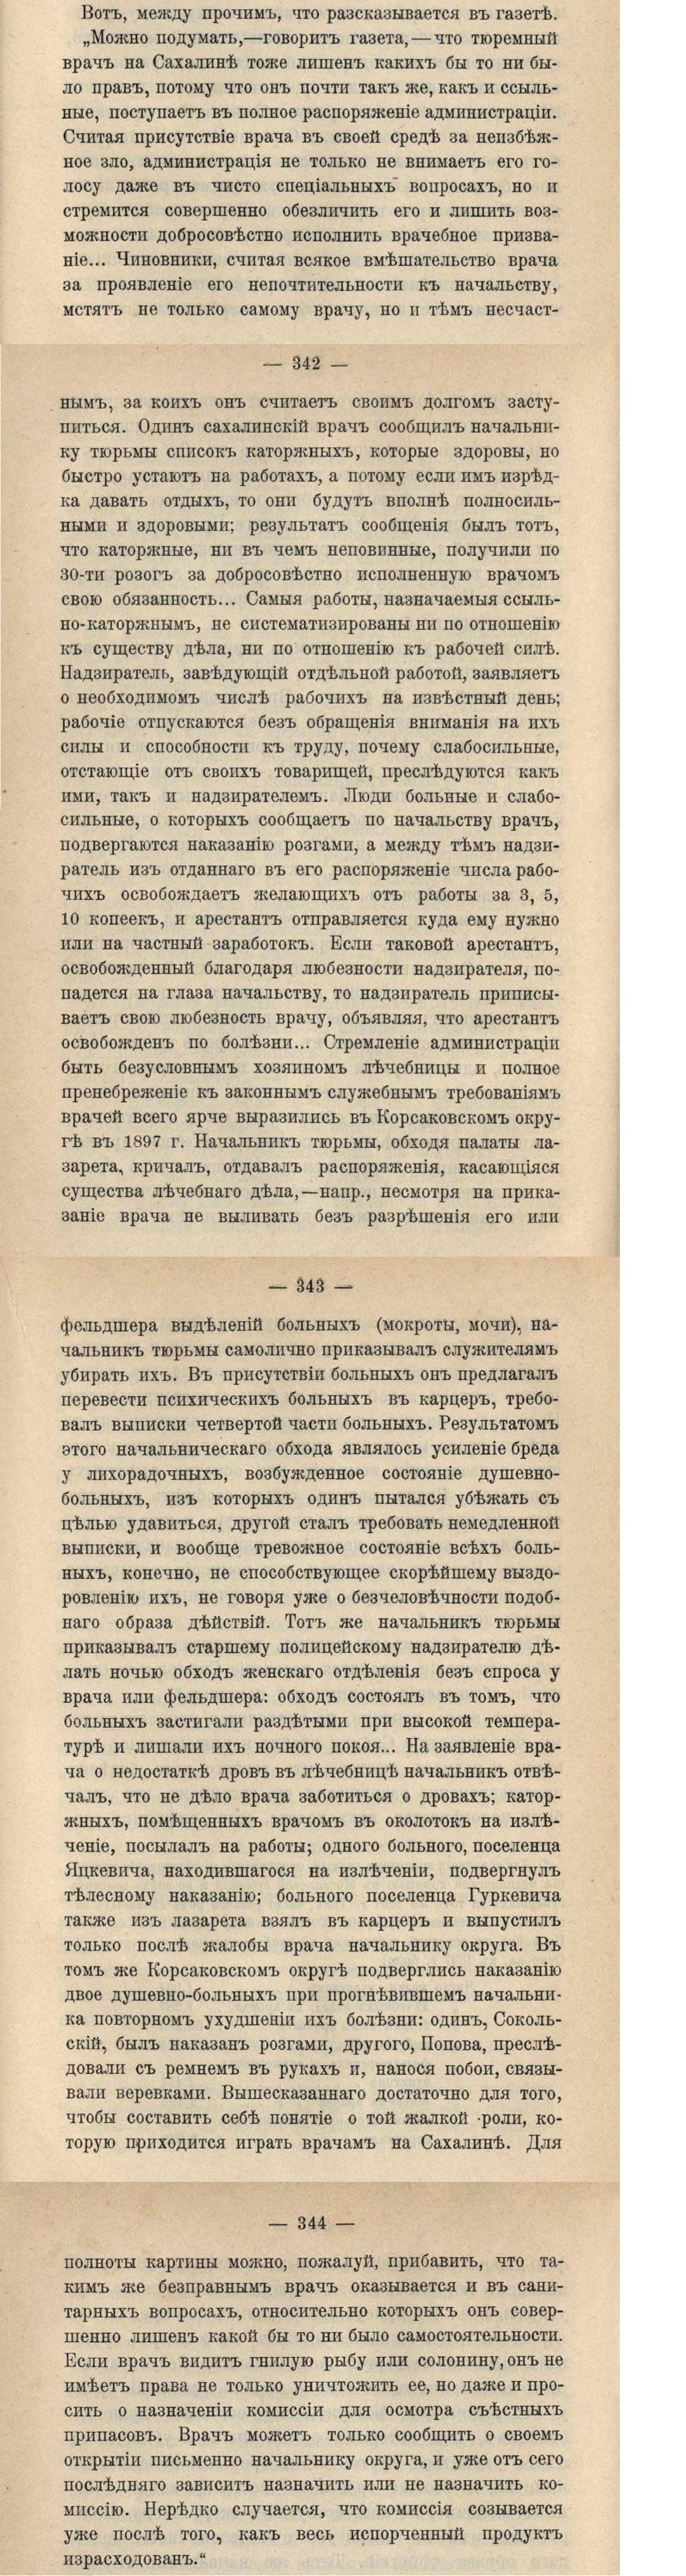 Archipelago Tsarlag. No. 2 - Российская империя, Politics, Prison, Repression, Negative, Sakhalin, Longpost